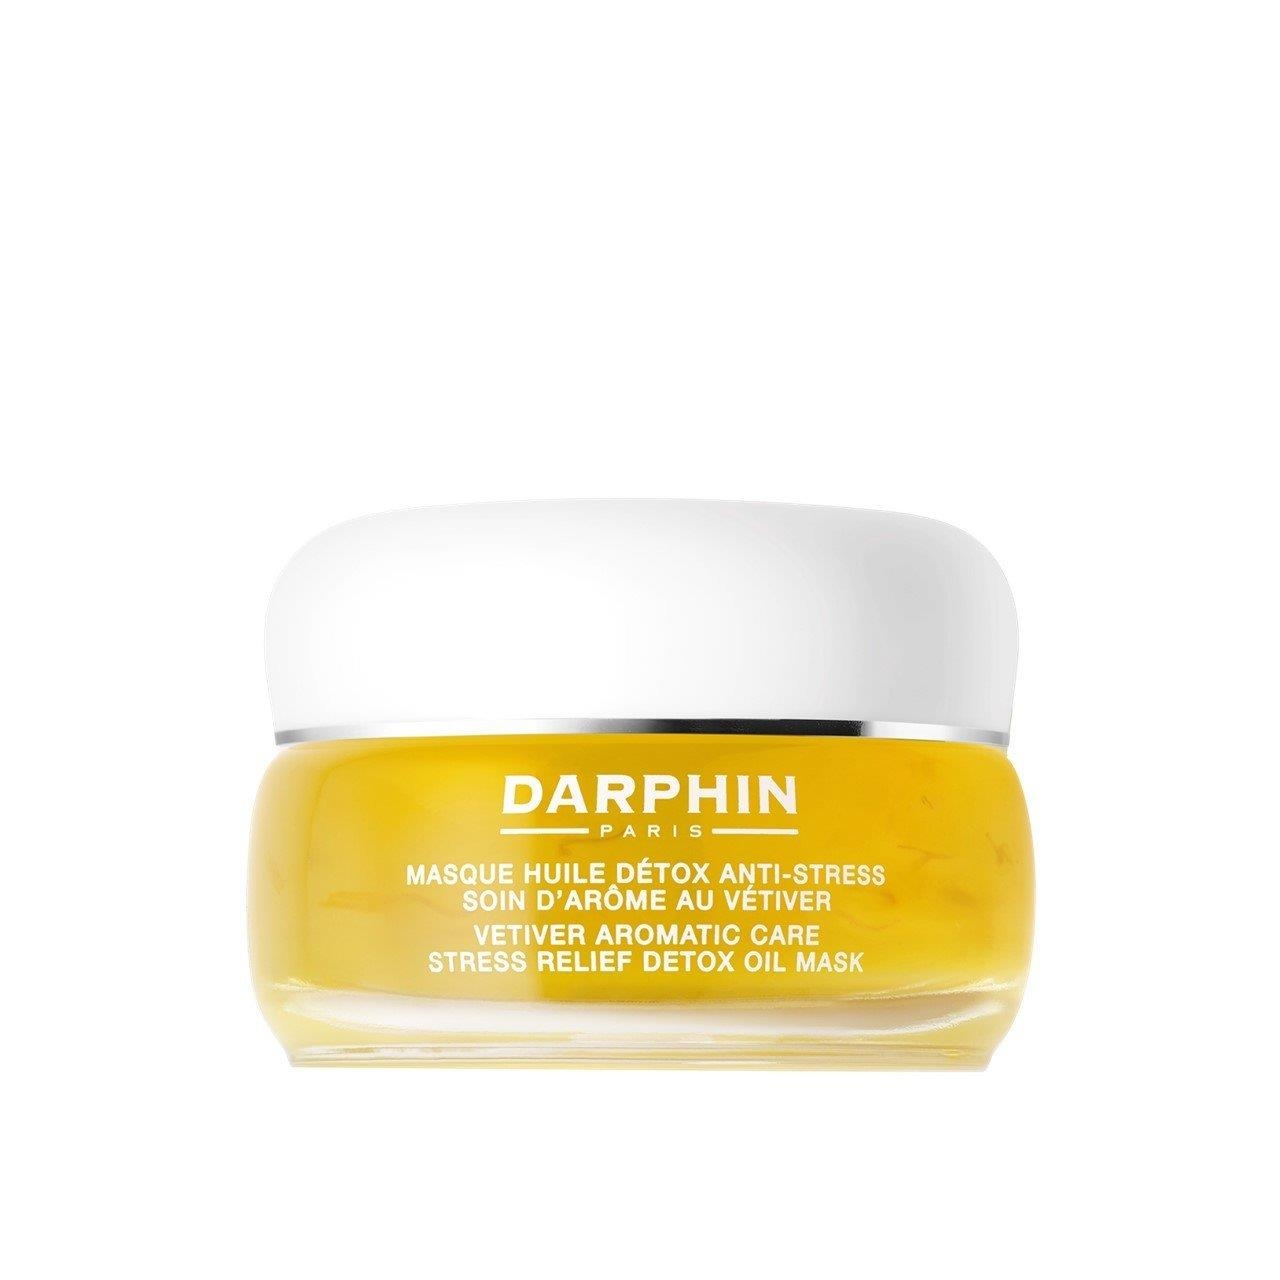 Darphin detox oil mask 50 ml - 1